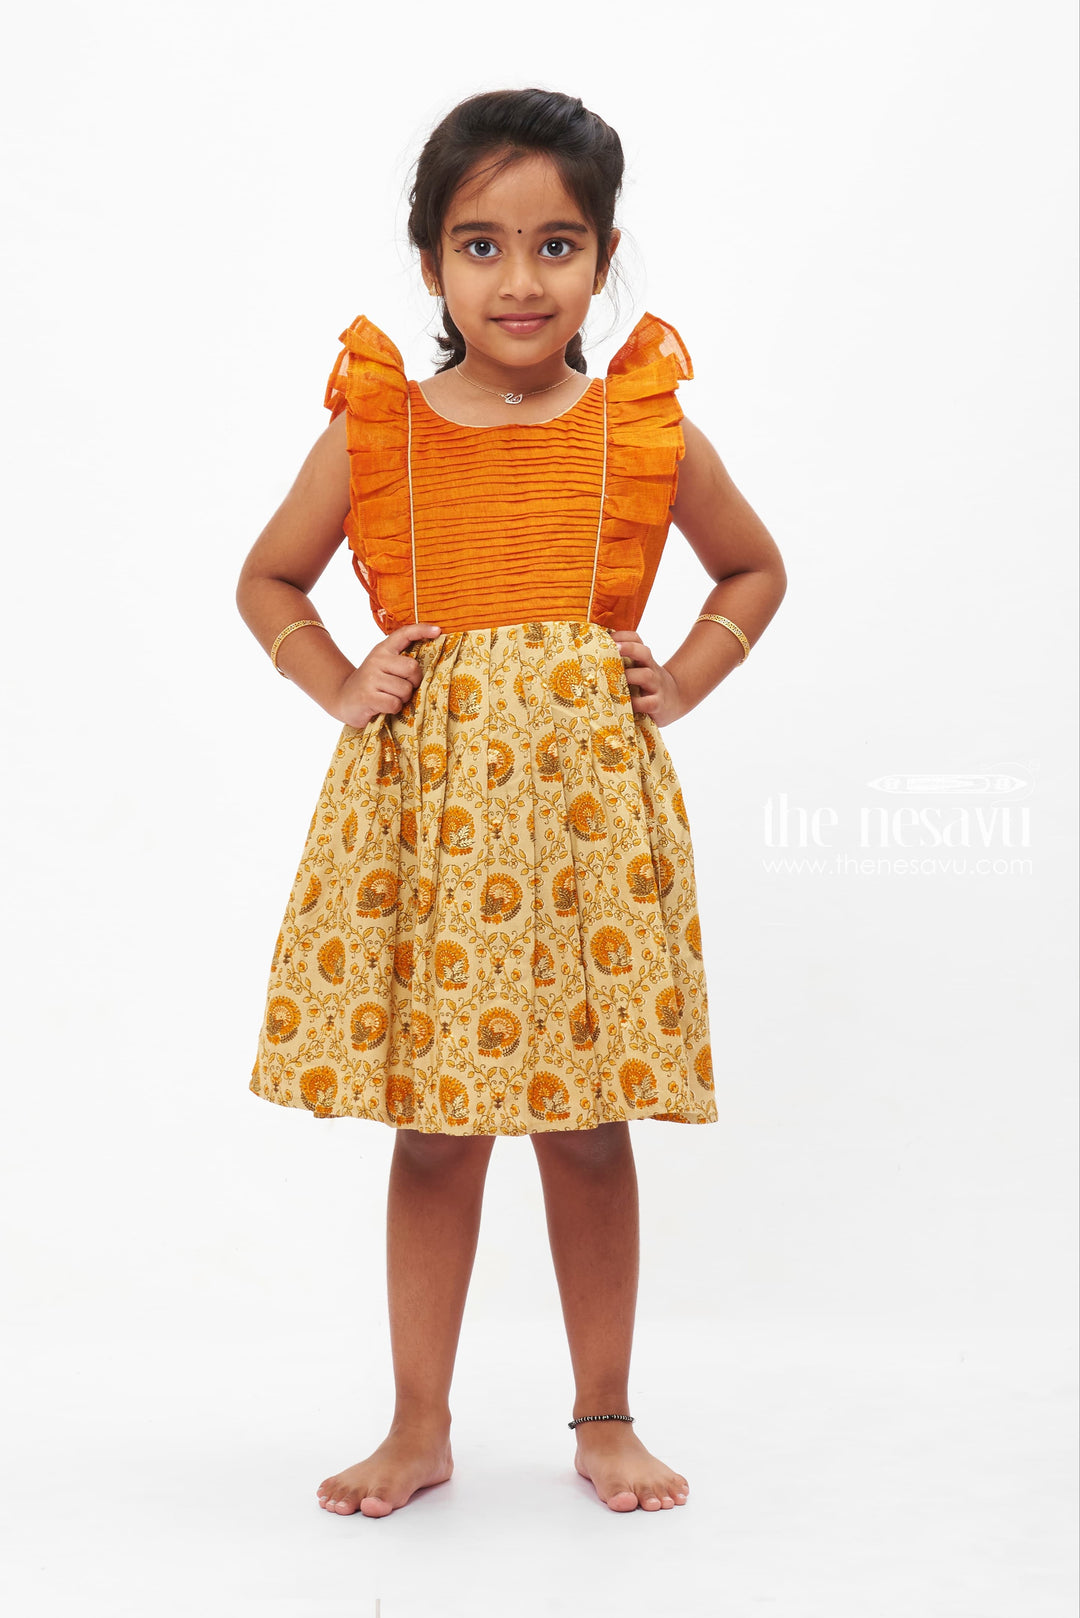 The Nesavu Baby Cotton Frocks Autumn Orange Pleated Frock with Beige Paisley Print for Girls Nesavu 16 (1Y) / Orange BFJ510C-16 Girls Orange Paisley Pleated Cotton Dress | The Nesavu